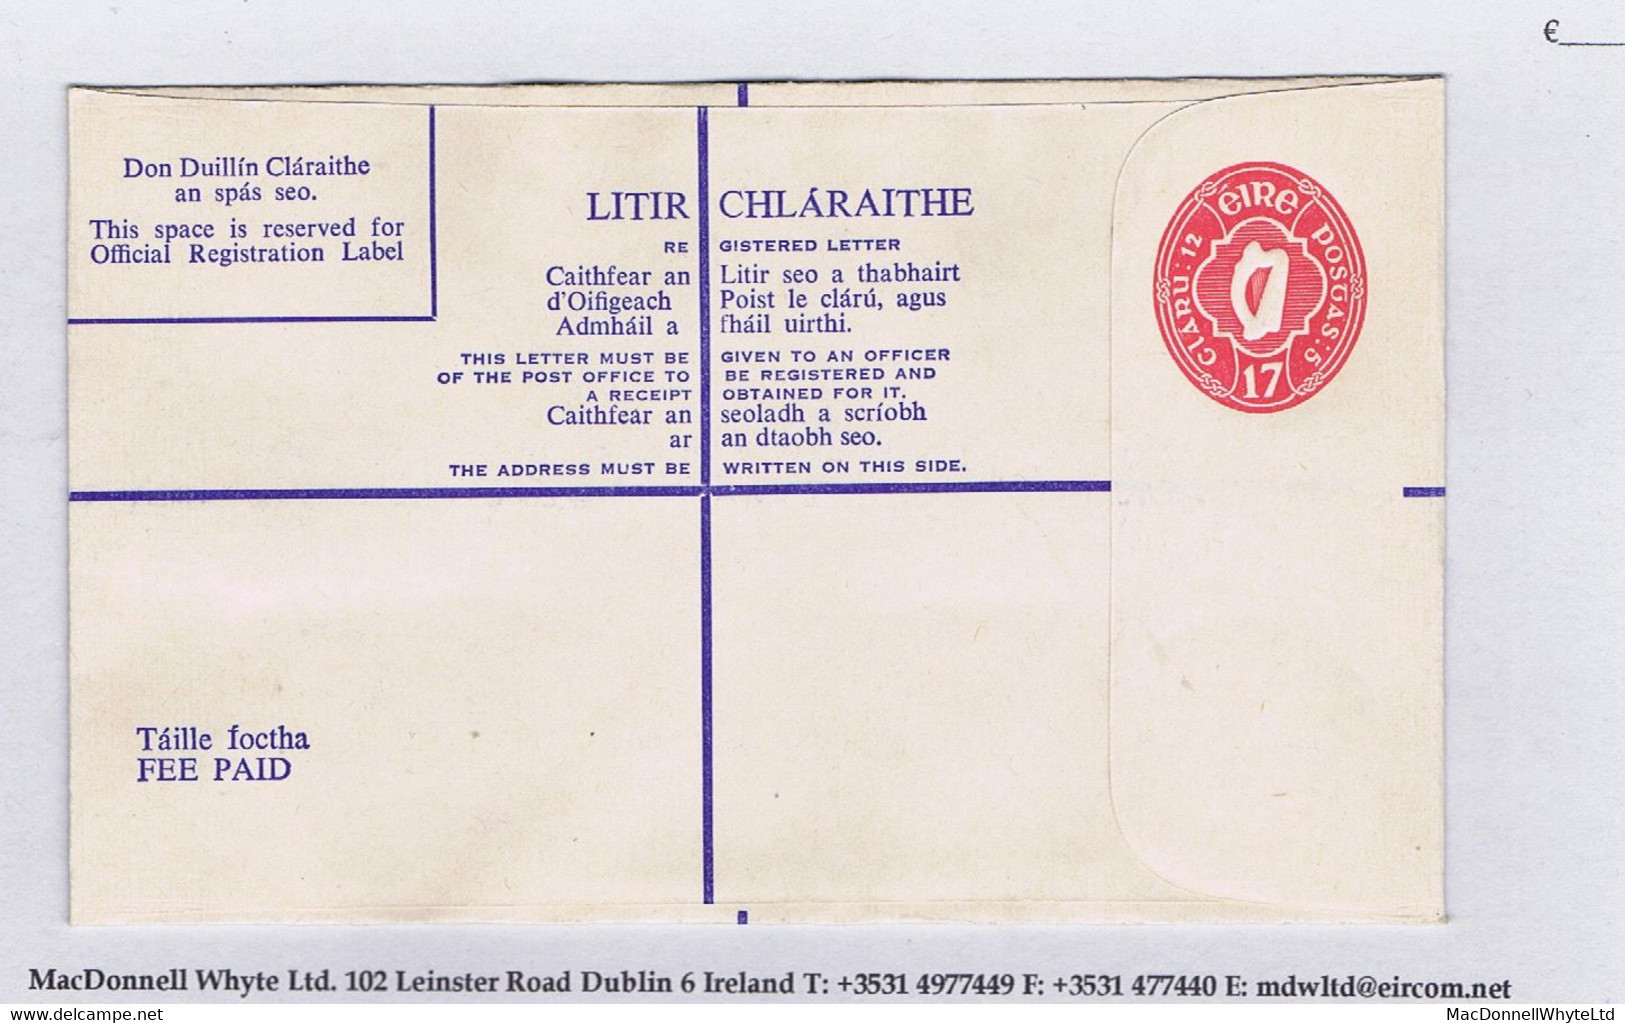 Ireland Postal Stationery 1973 17p Registered Envelope Size G Fee 10p/£5.44 Mint. Jung EU12a - Postal Stationery